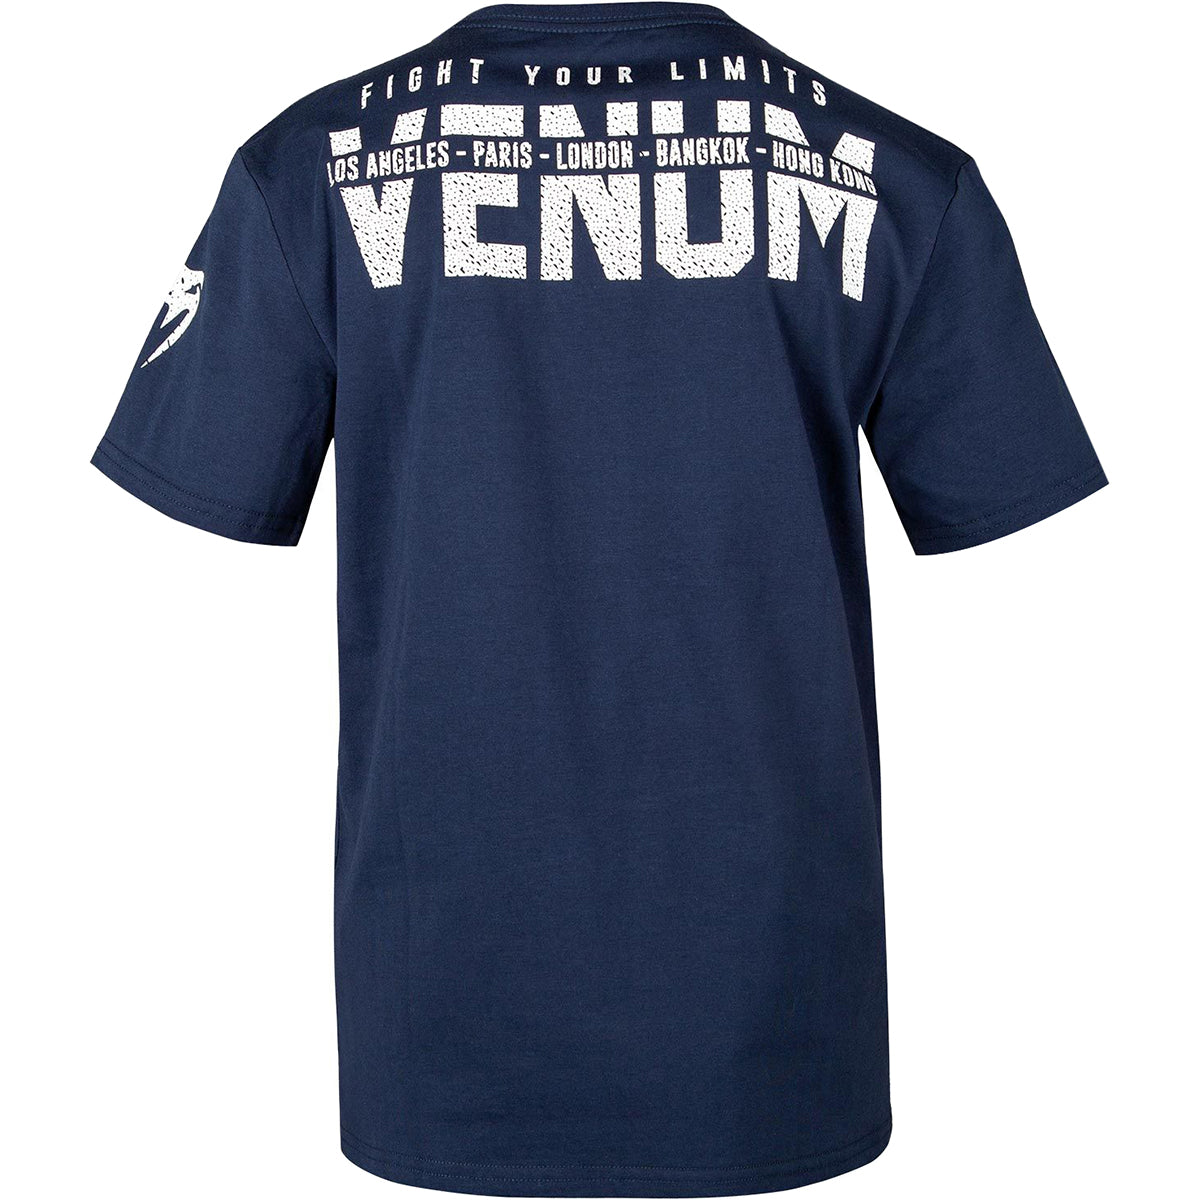 Venum Kids Signature Short Sleeve T-Shirt - Navy Blue Venum